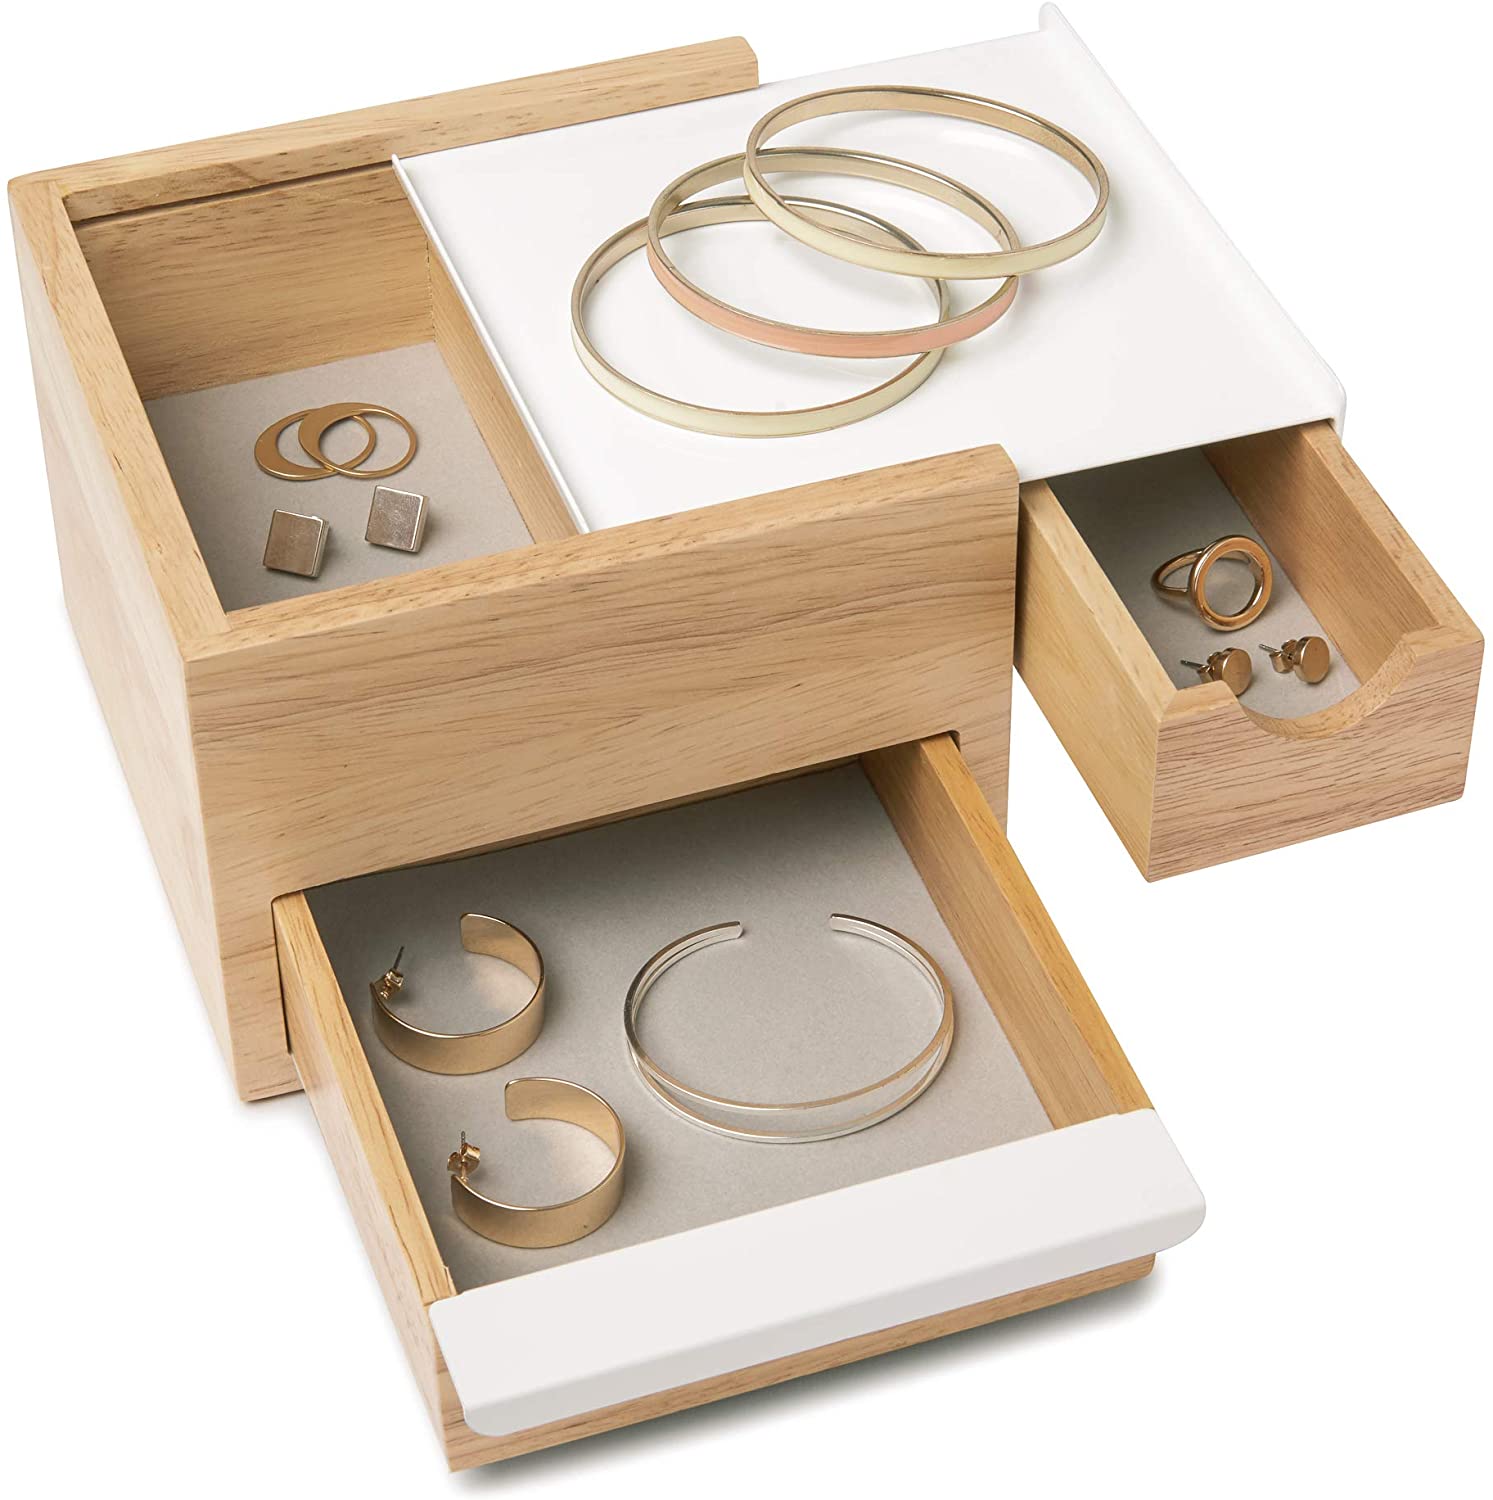 Umbra Stowit Mini Jewellery Box